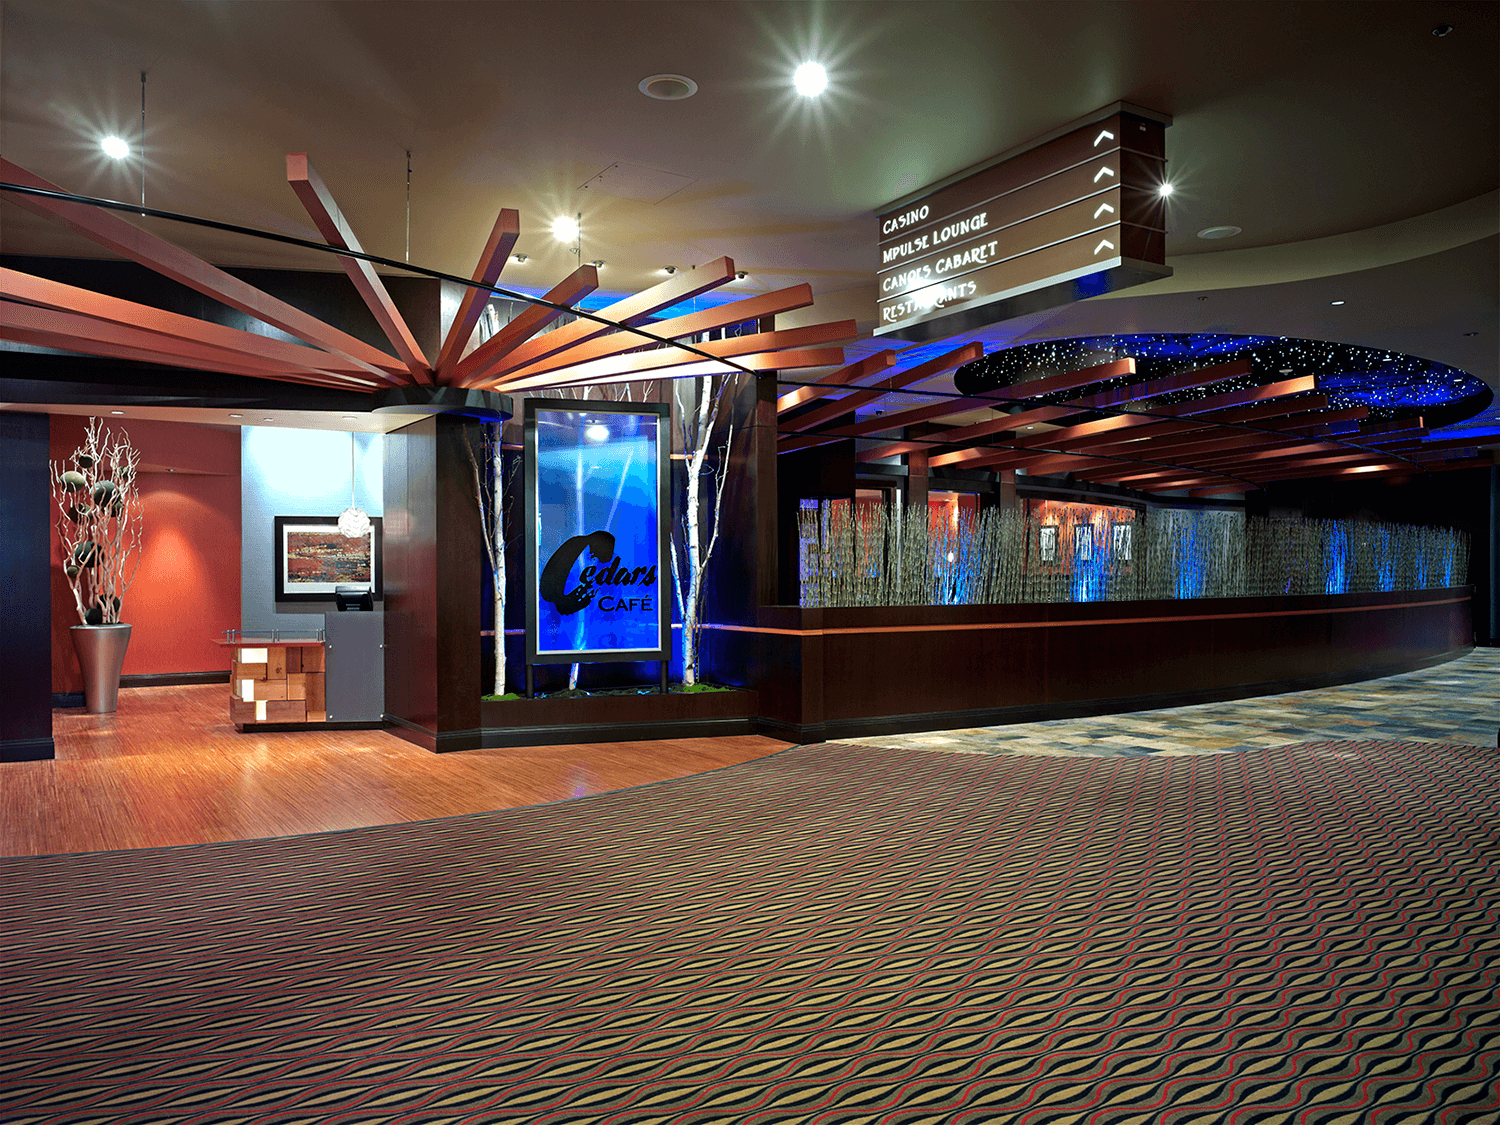 Cedars Cafe Entrance at Tulalip Casino